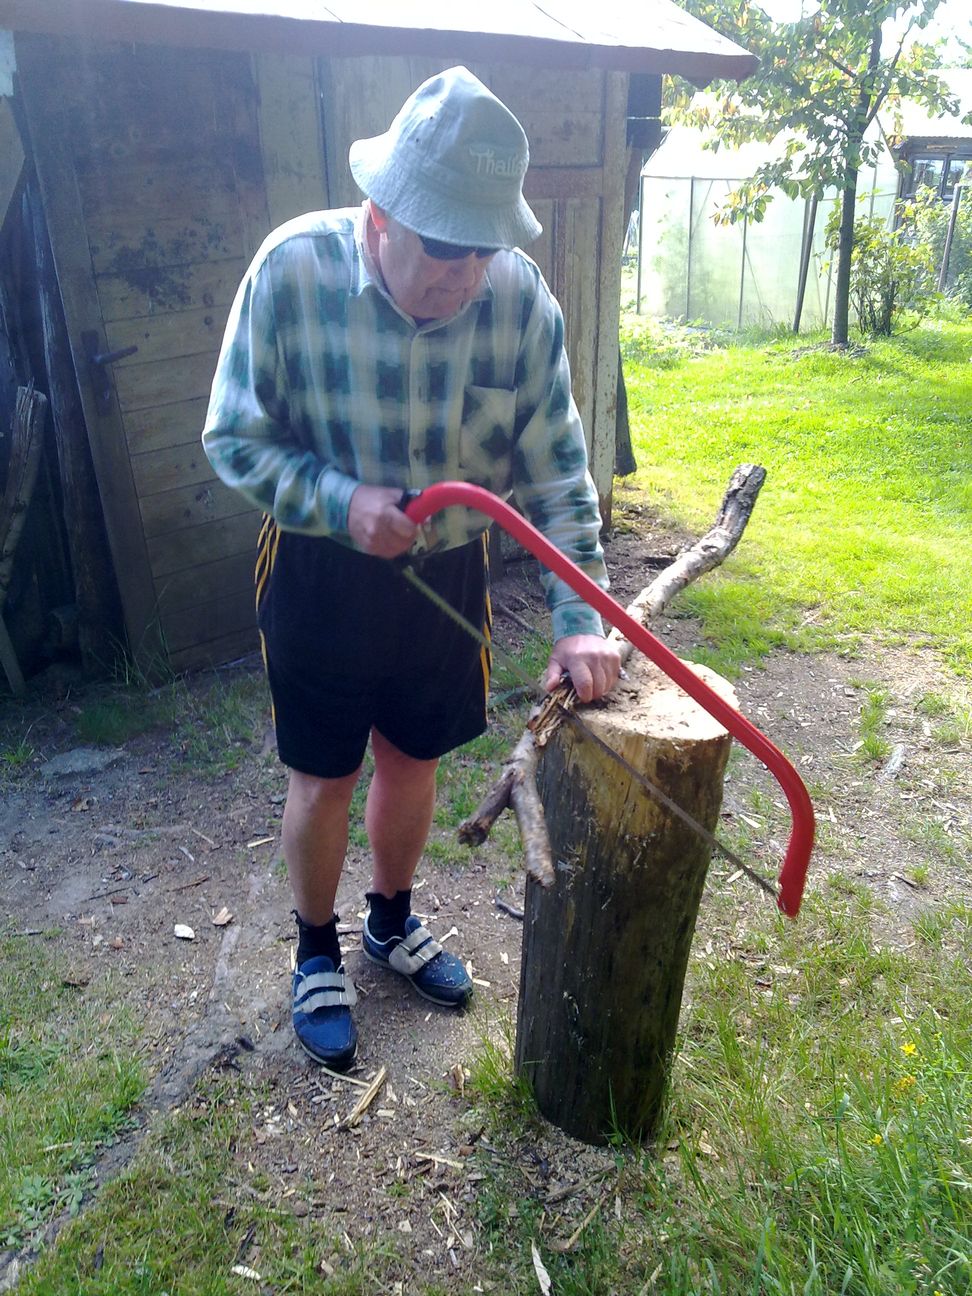 řezání dřeva / Cutting wood